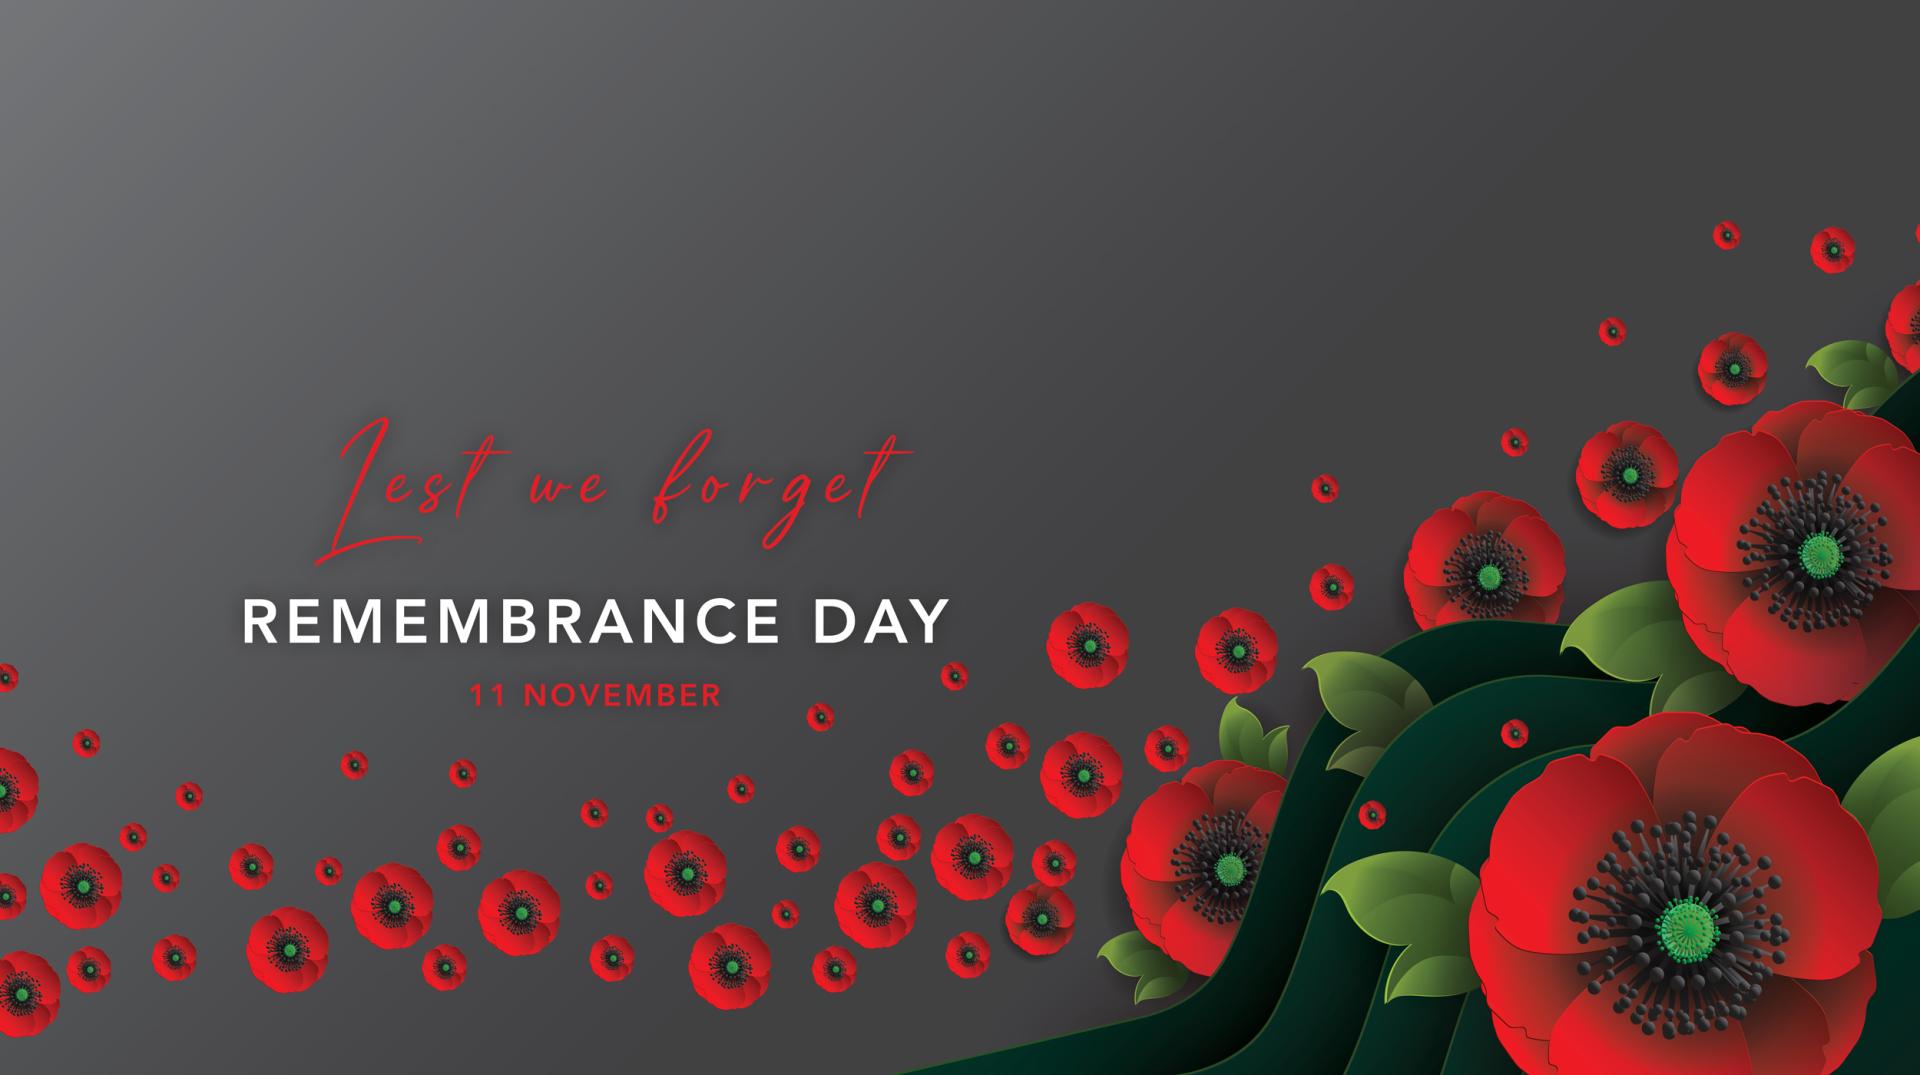 Lest We Forget - 11 November - Remembrance Day